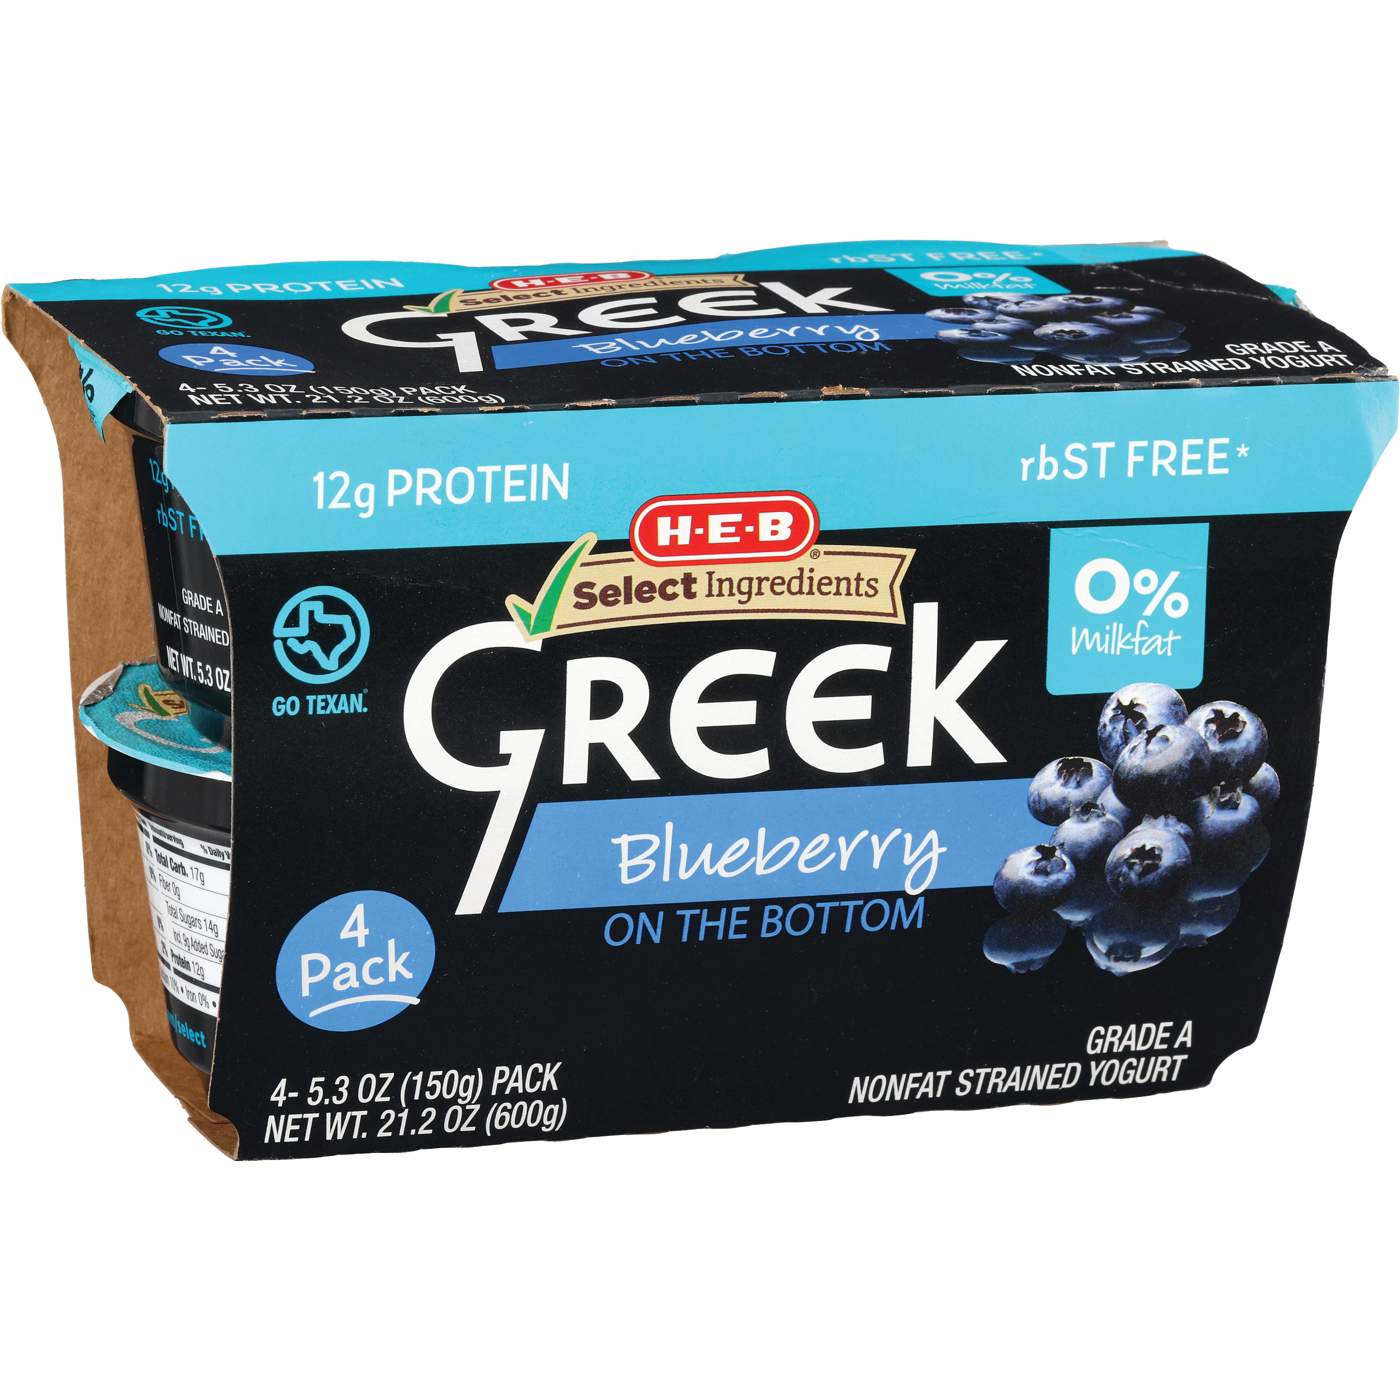 H-E-B Non-Fat Blueberry on the Bottom Greek Yogurt; image 2 of 2